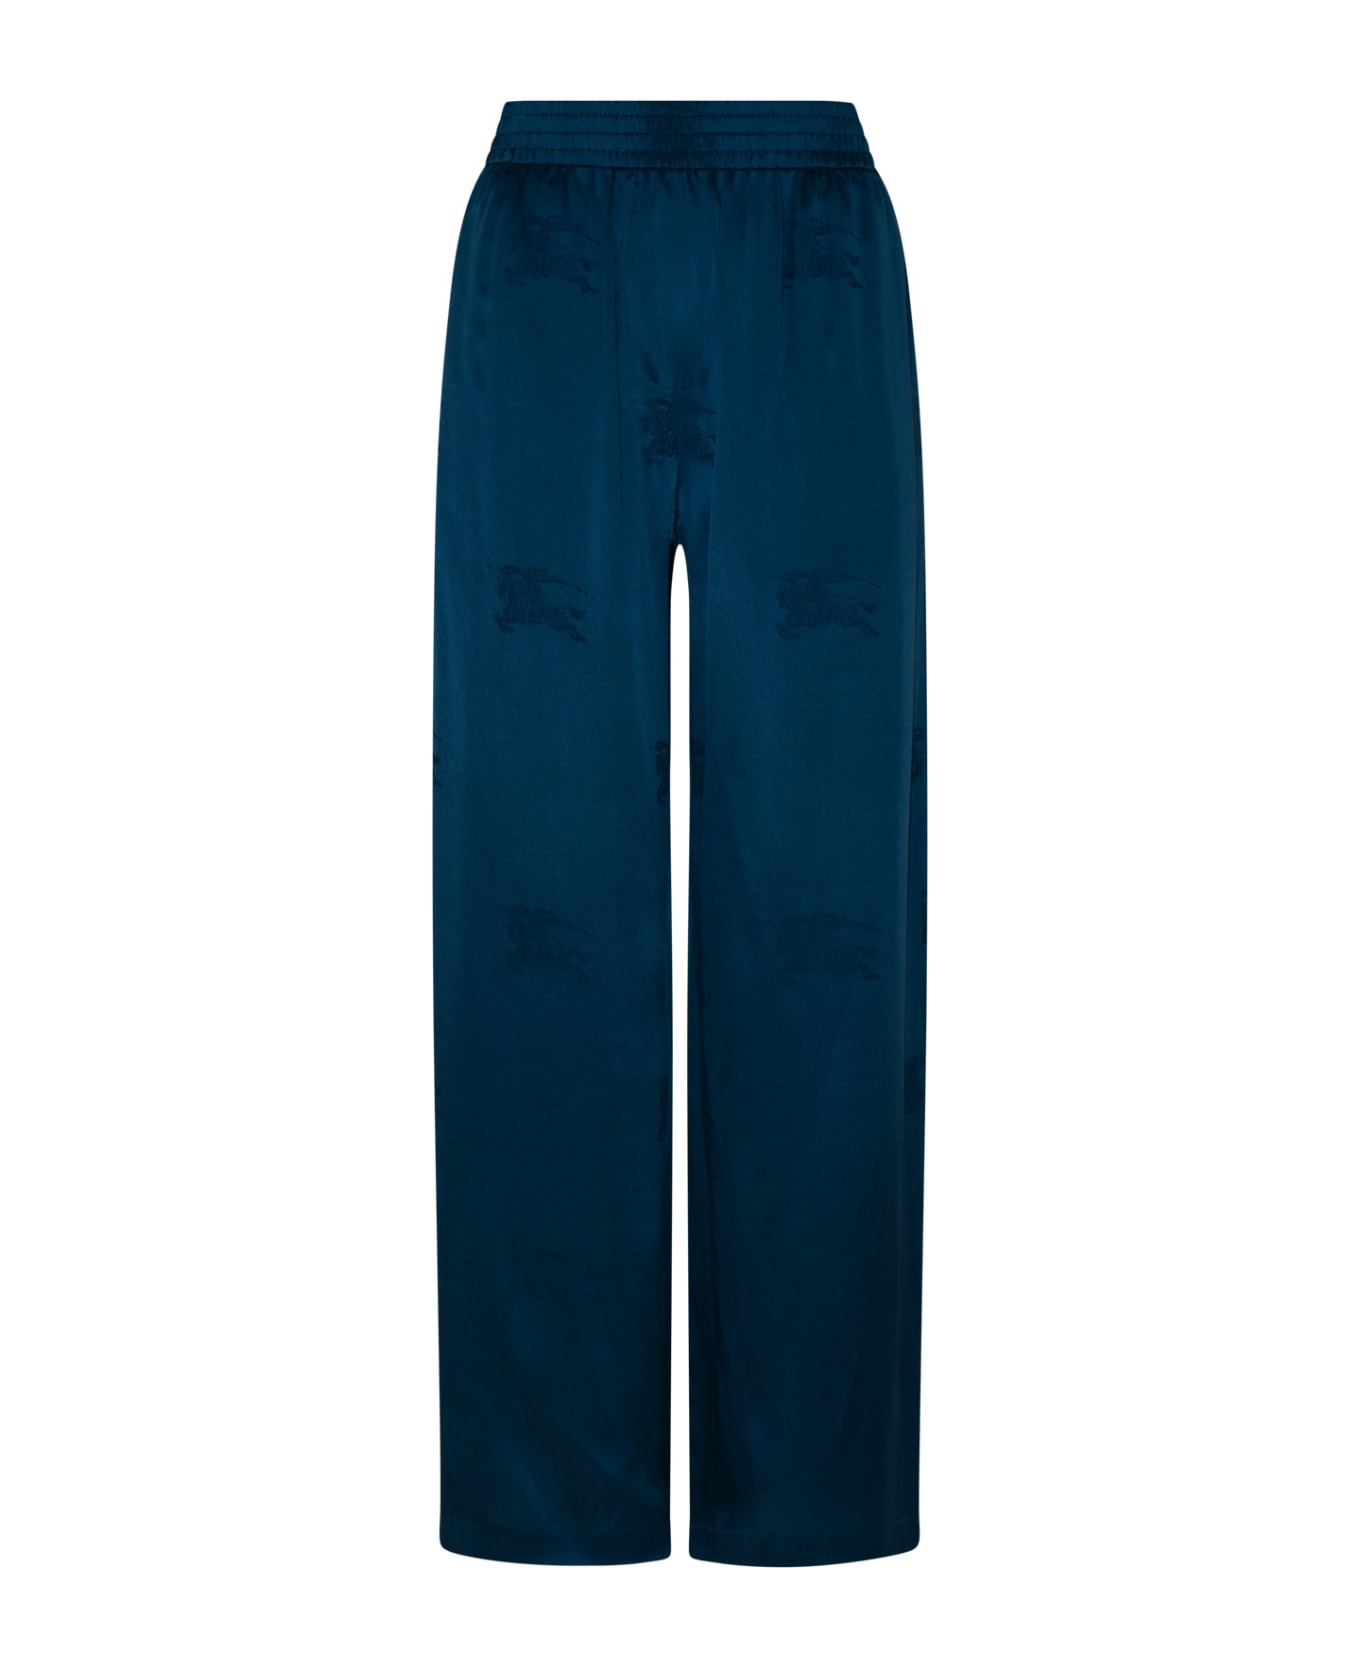 Burberry Unsead Navy Silk Pants - Muted navy ip pat